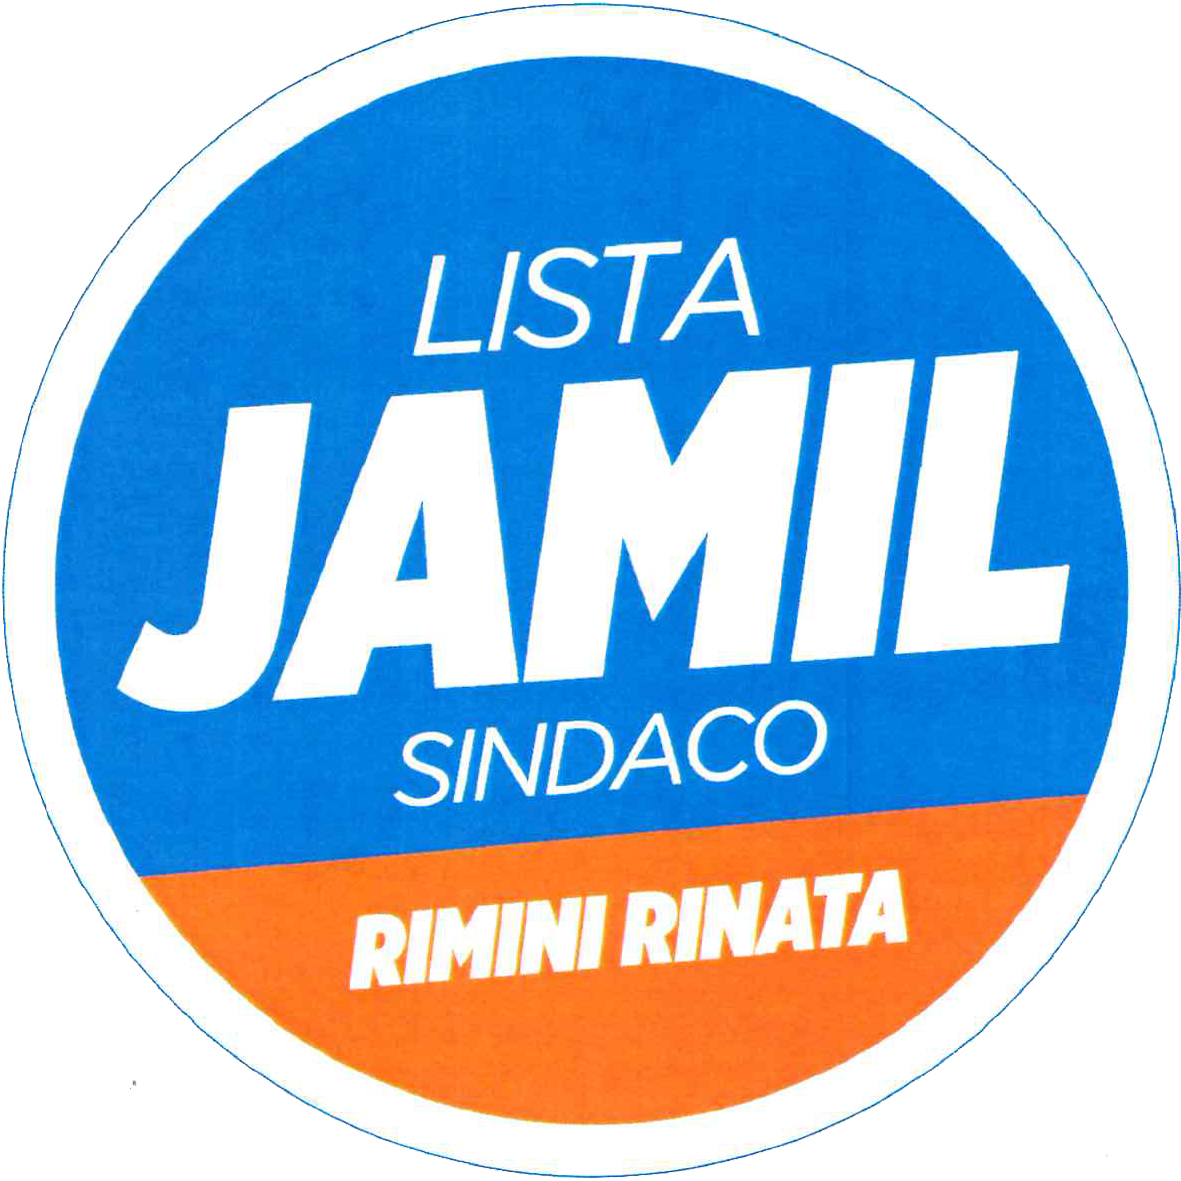 JAMIL SINDACO RIMINI RINATA